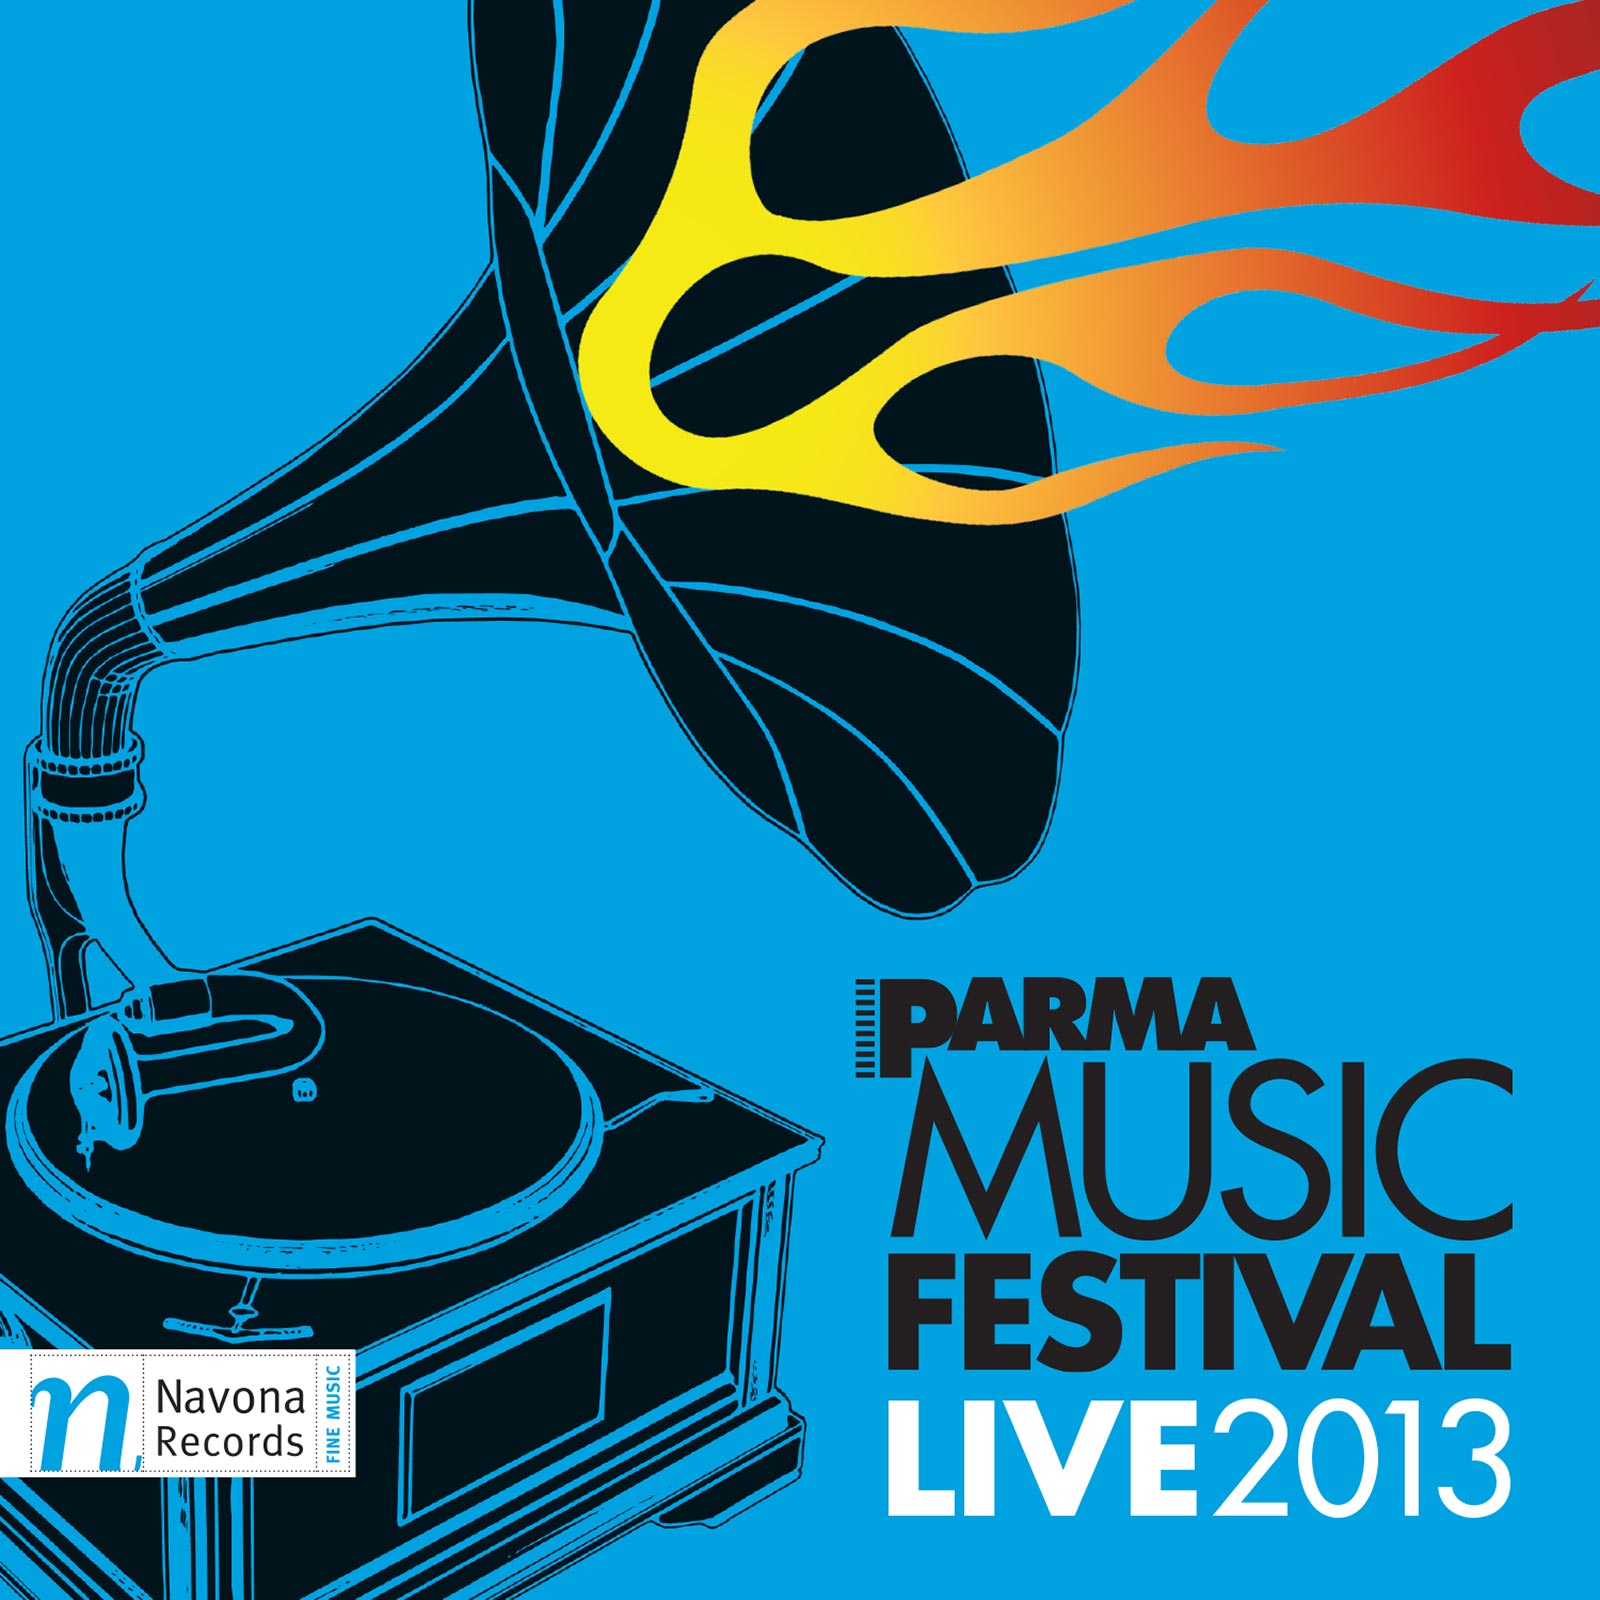 PARMA Music Festival Live 2013